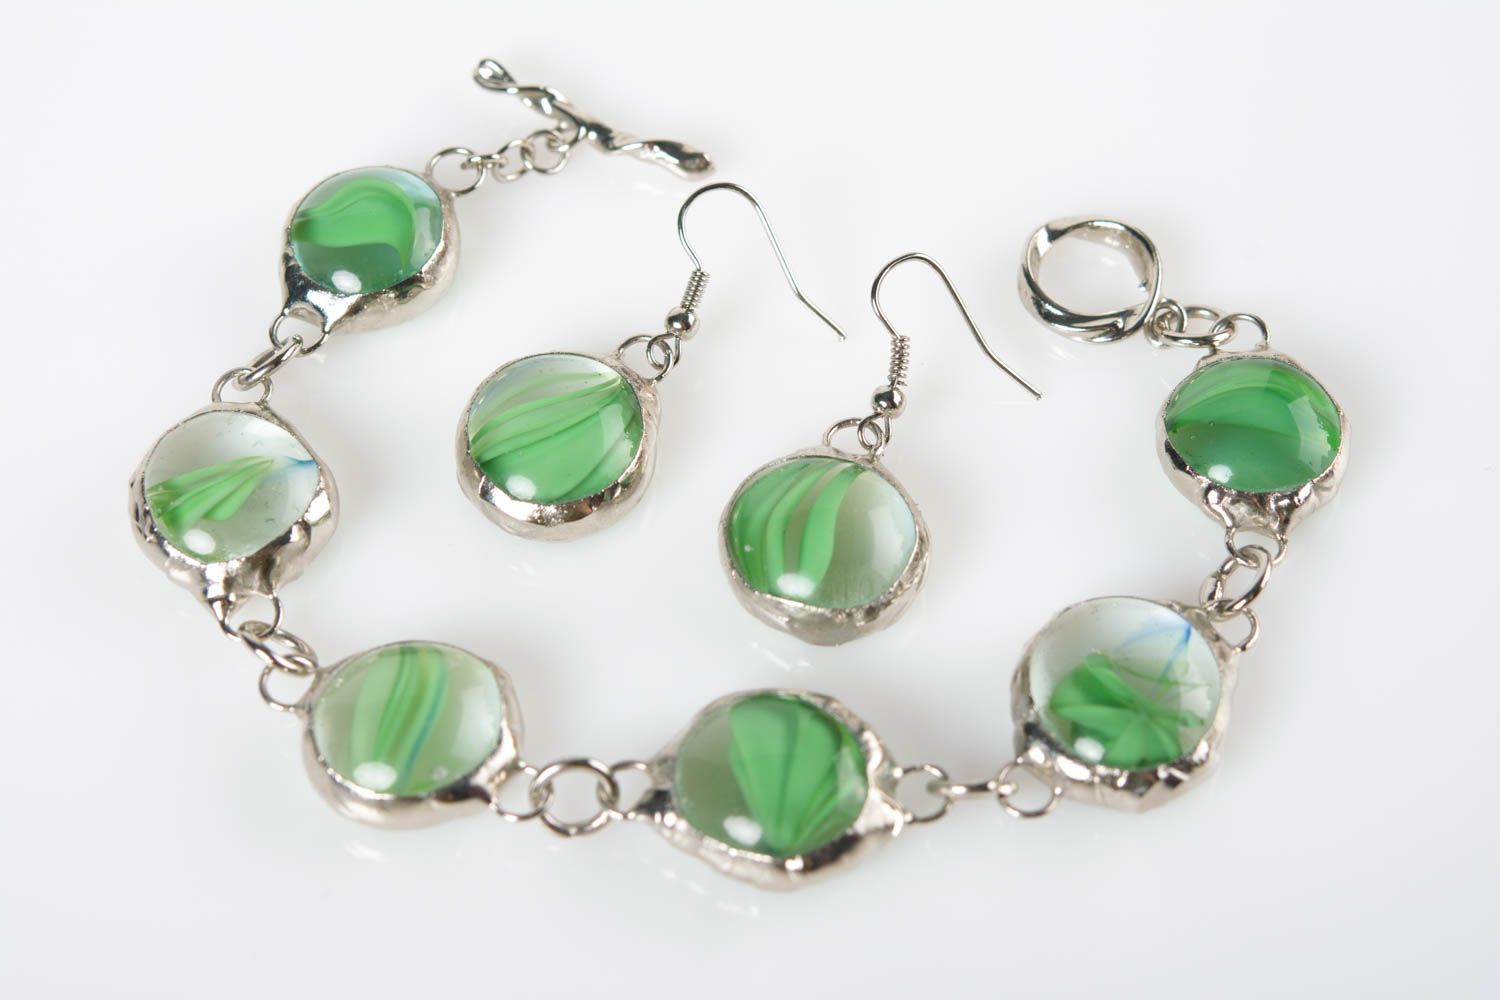 Handmade green glass and metal designer jewelry set wrist bracelet and earrings photo 1